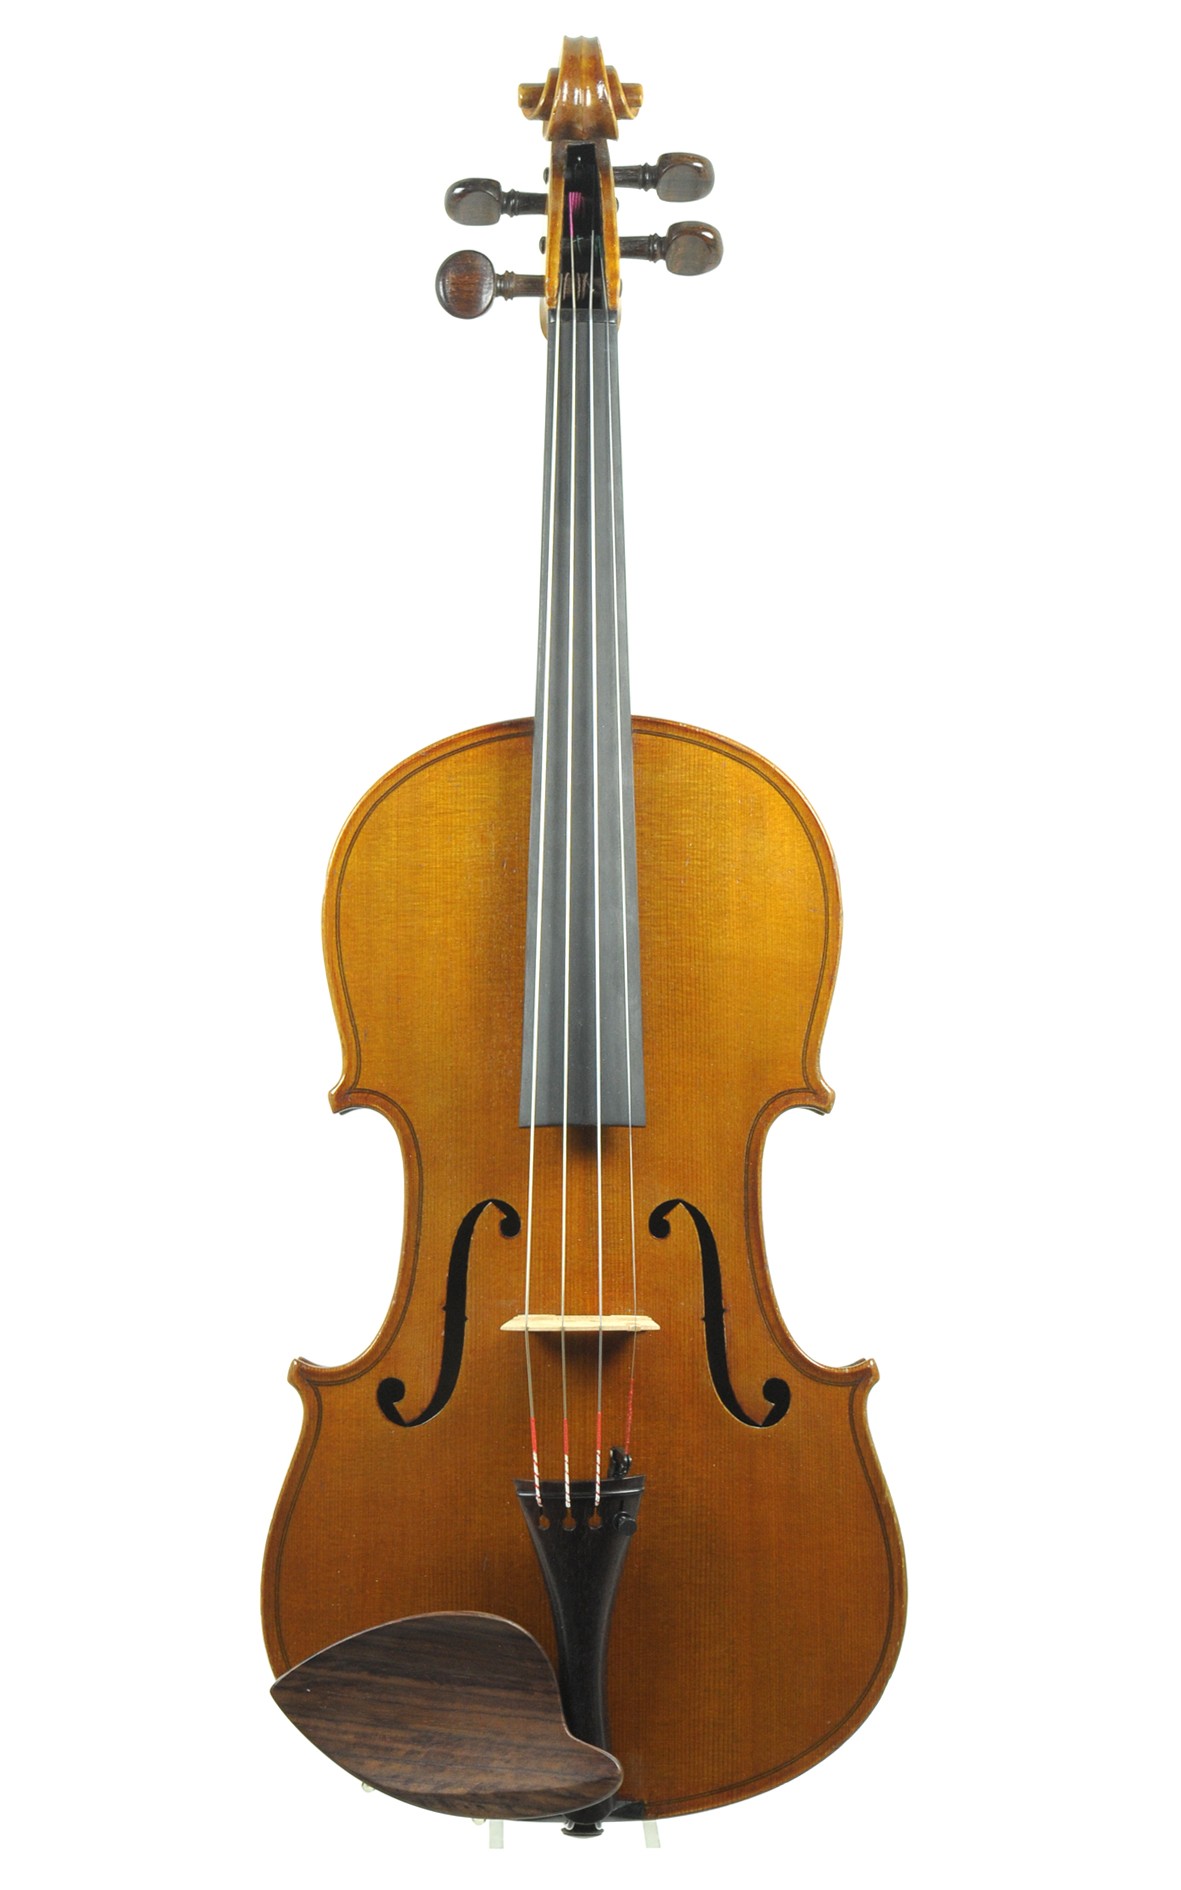 Sivori violin from Saxony, 1898 - top